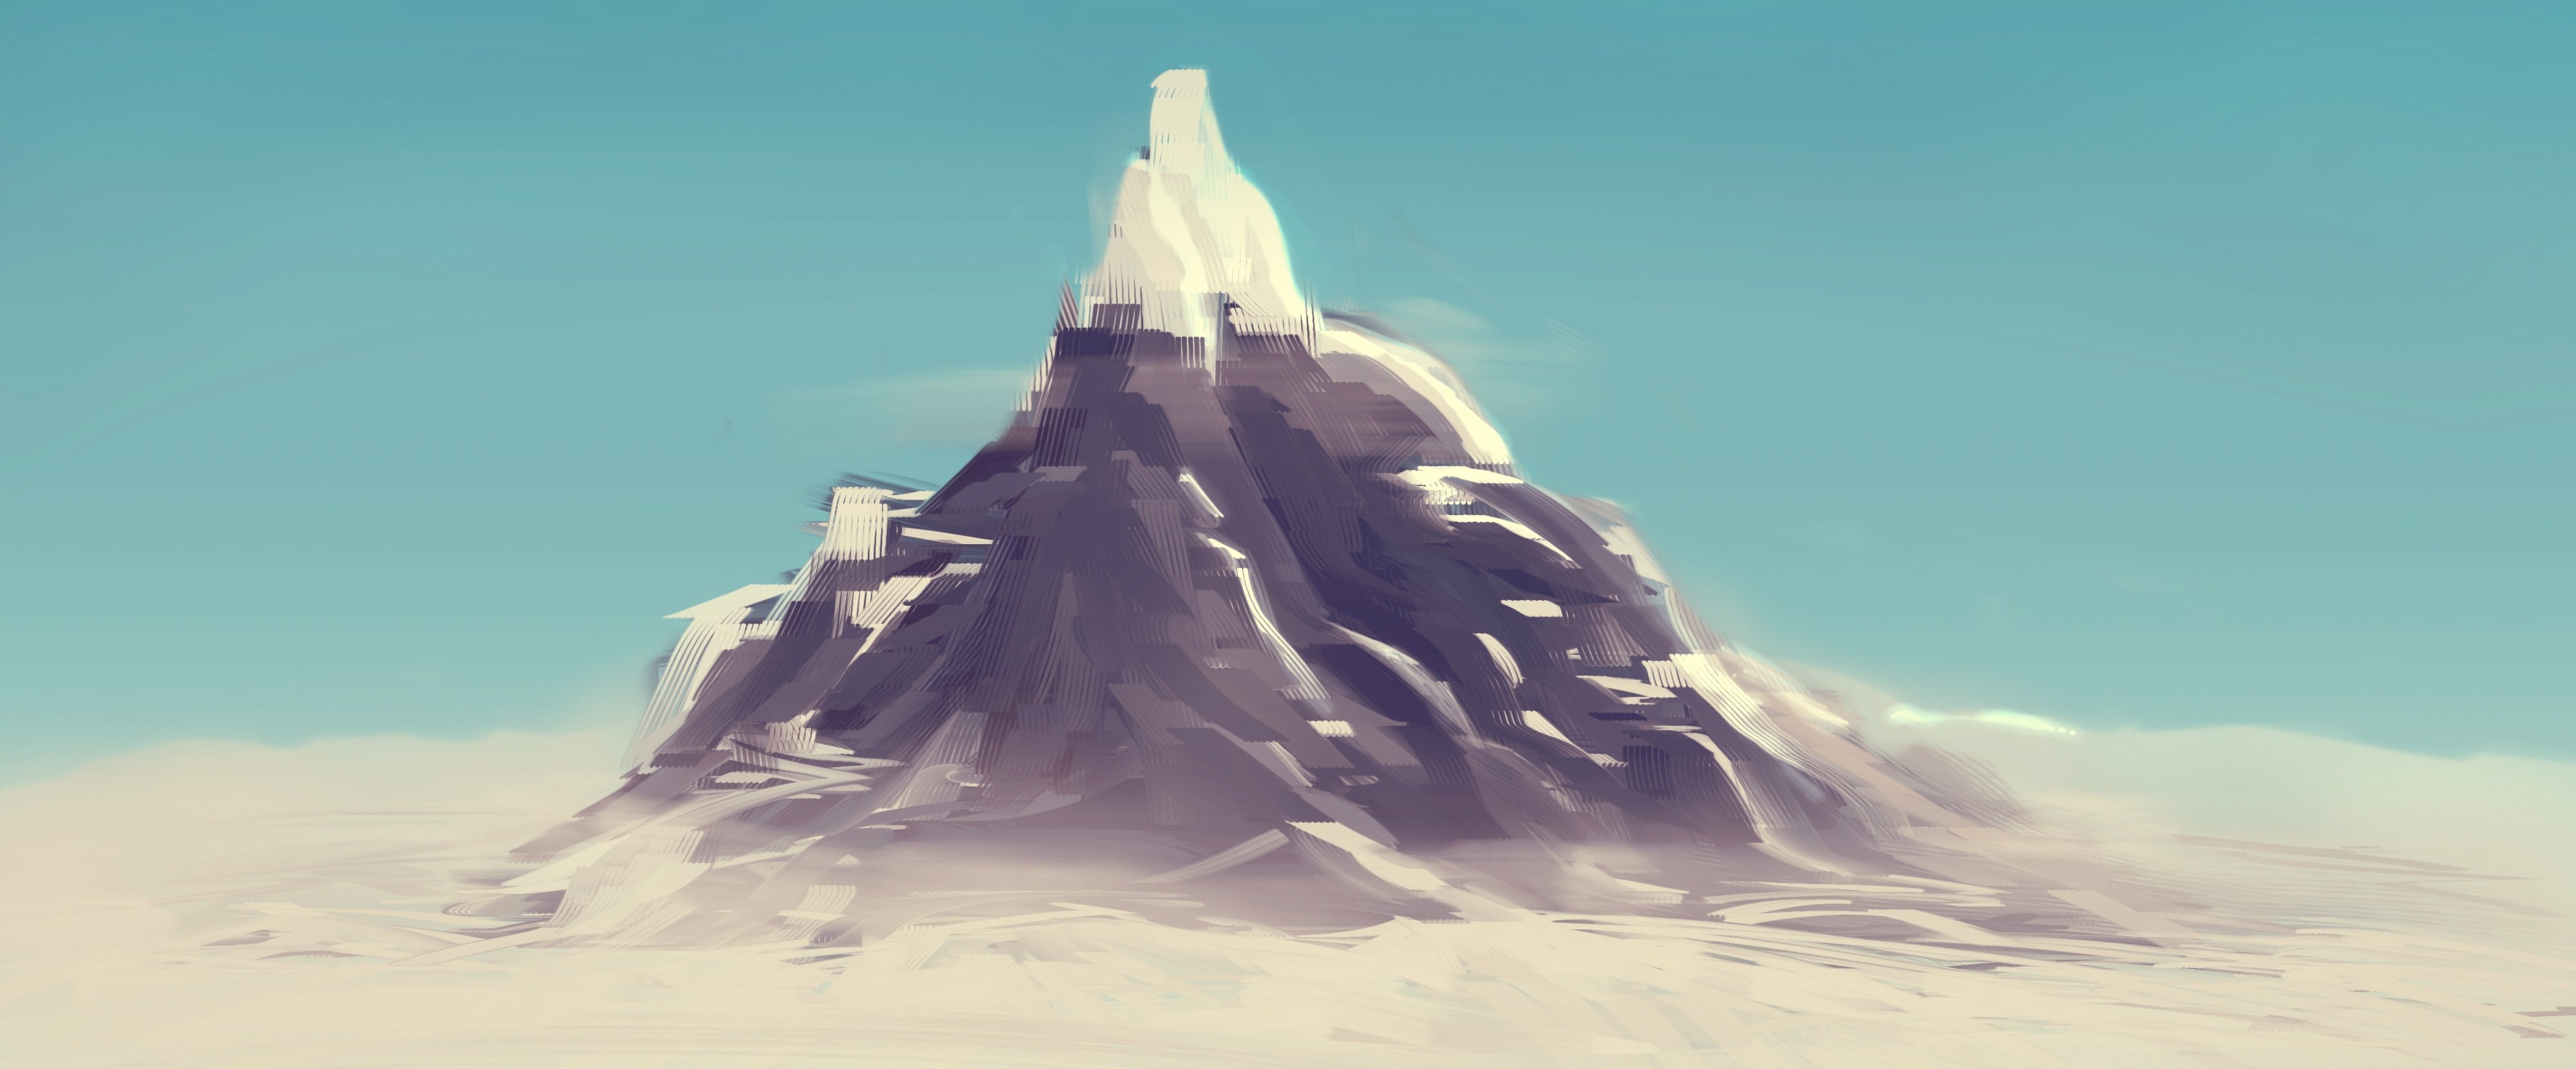 gray and white mountain illustration, digital art, mountains